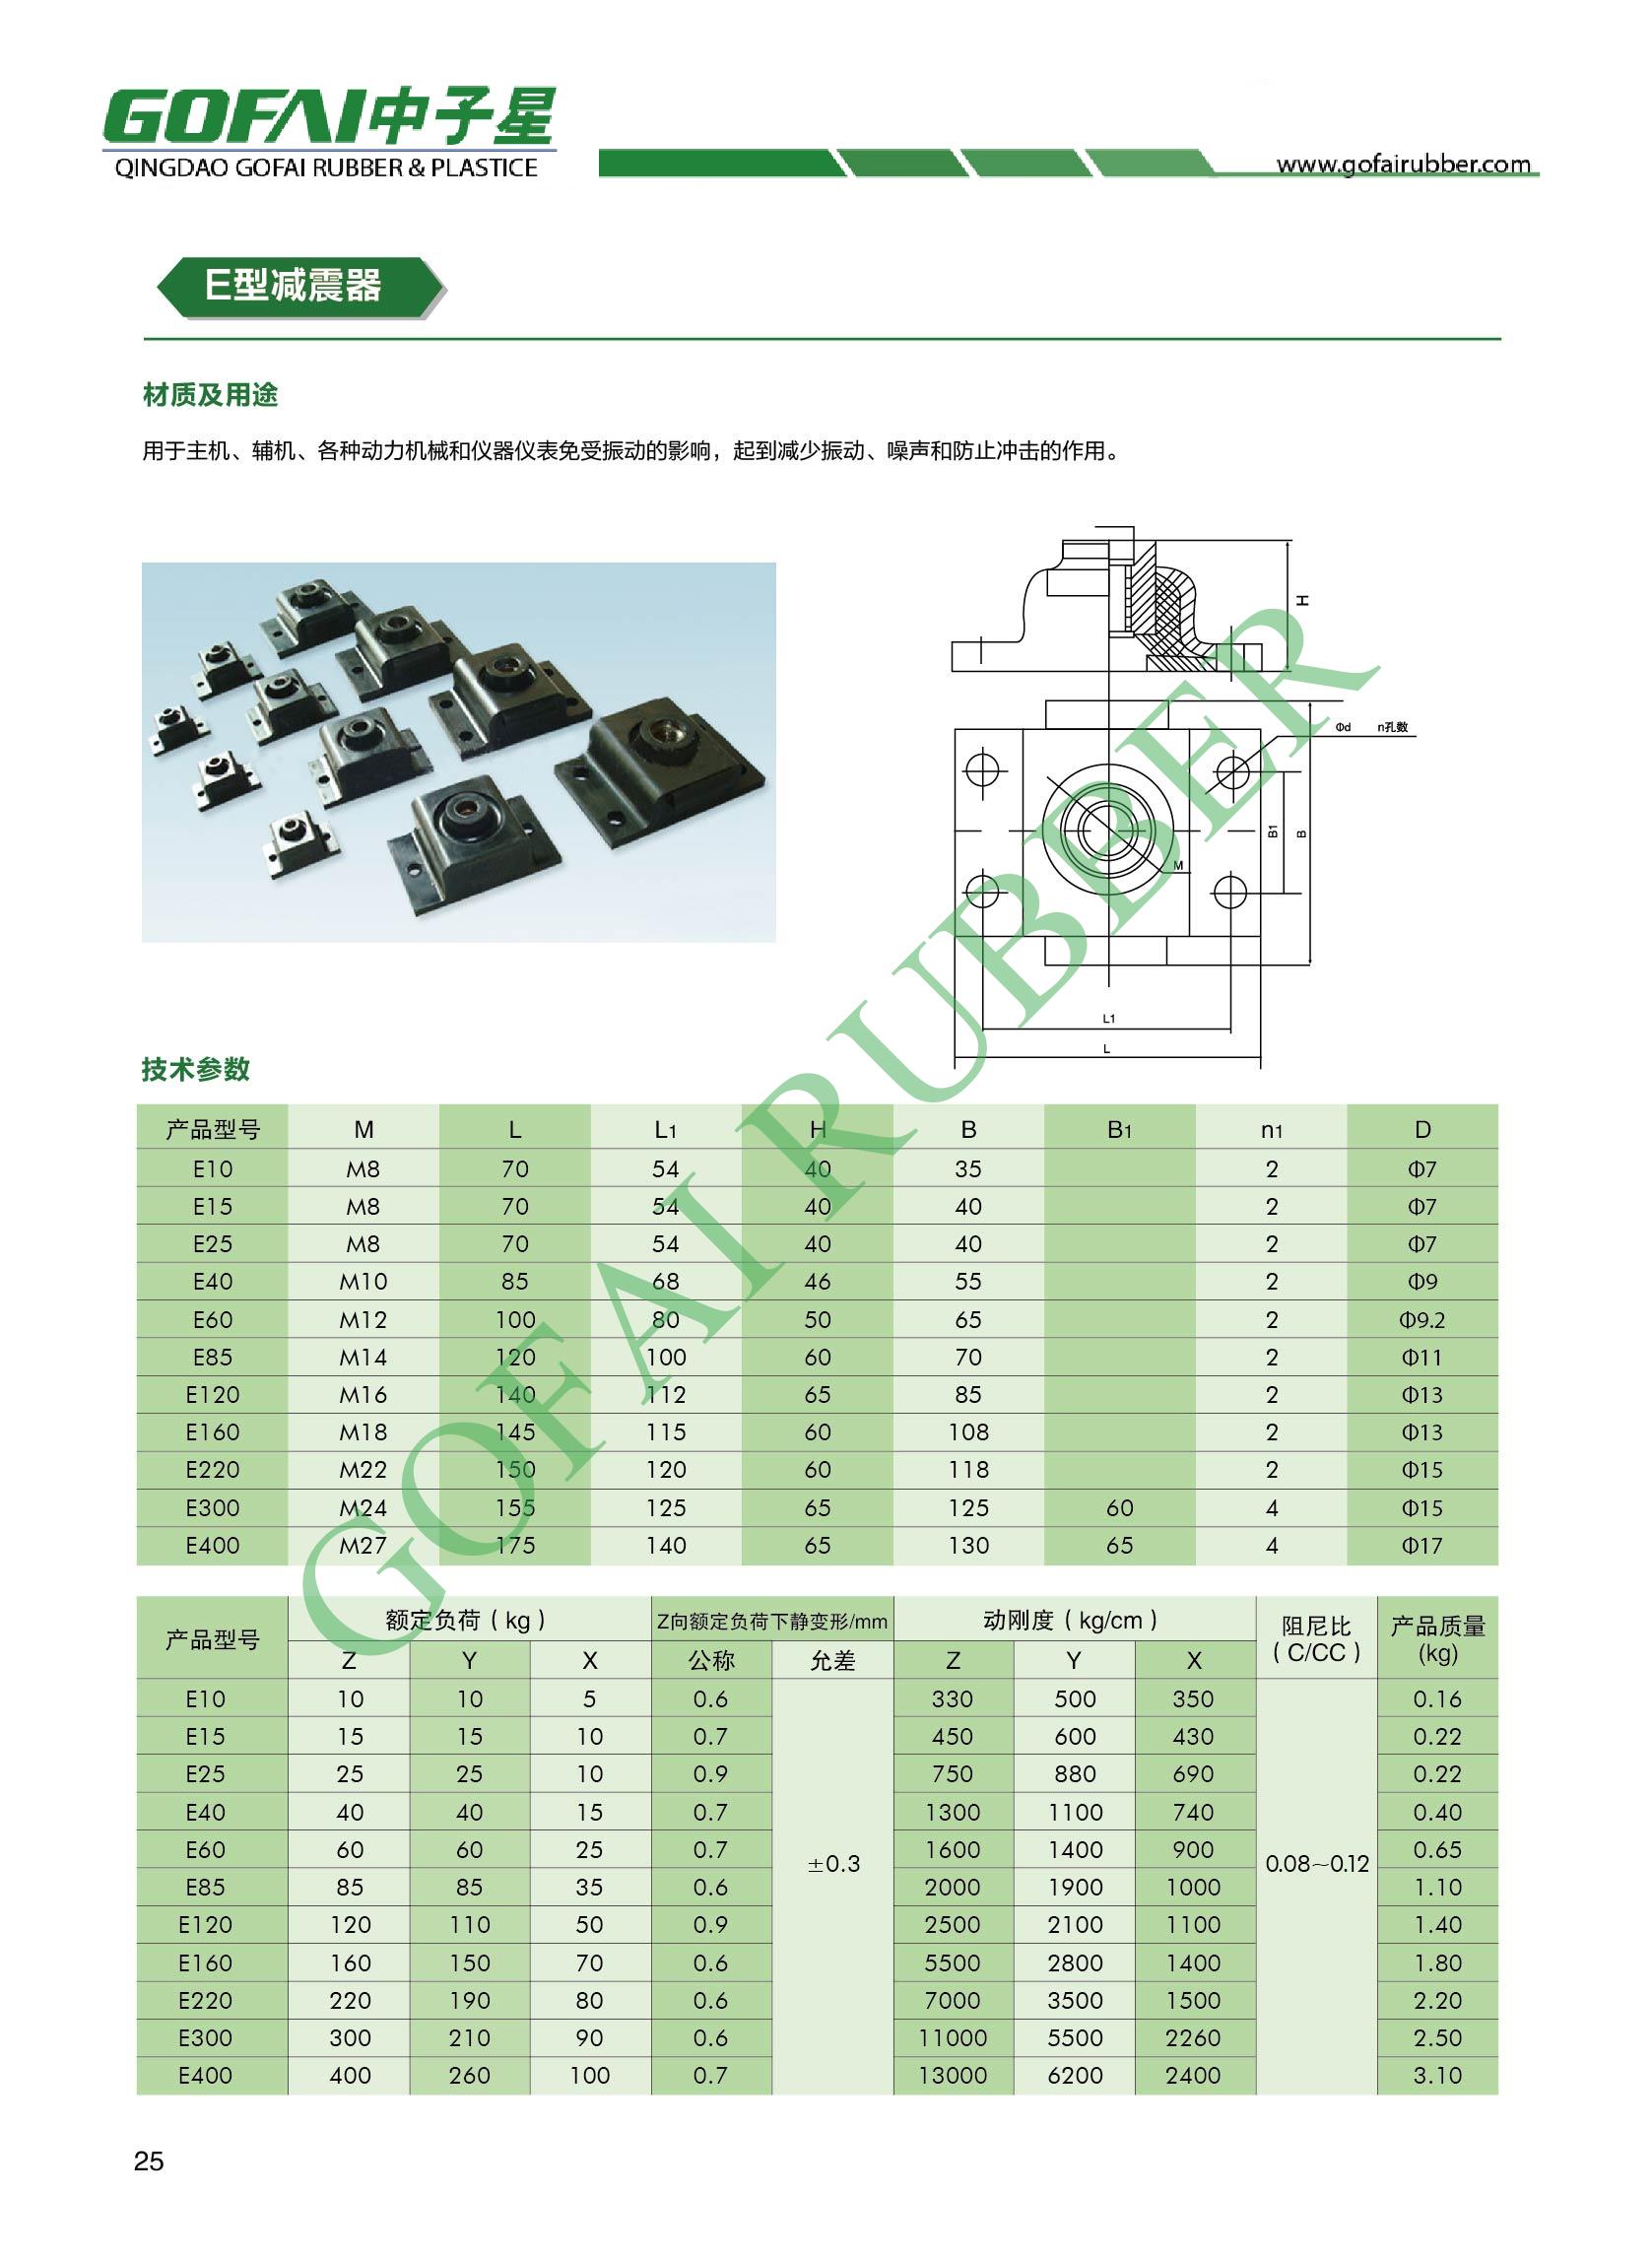 GOFAI catalog for rubber anti-vibration mounts_23.jpg